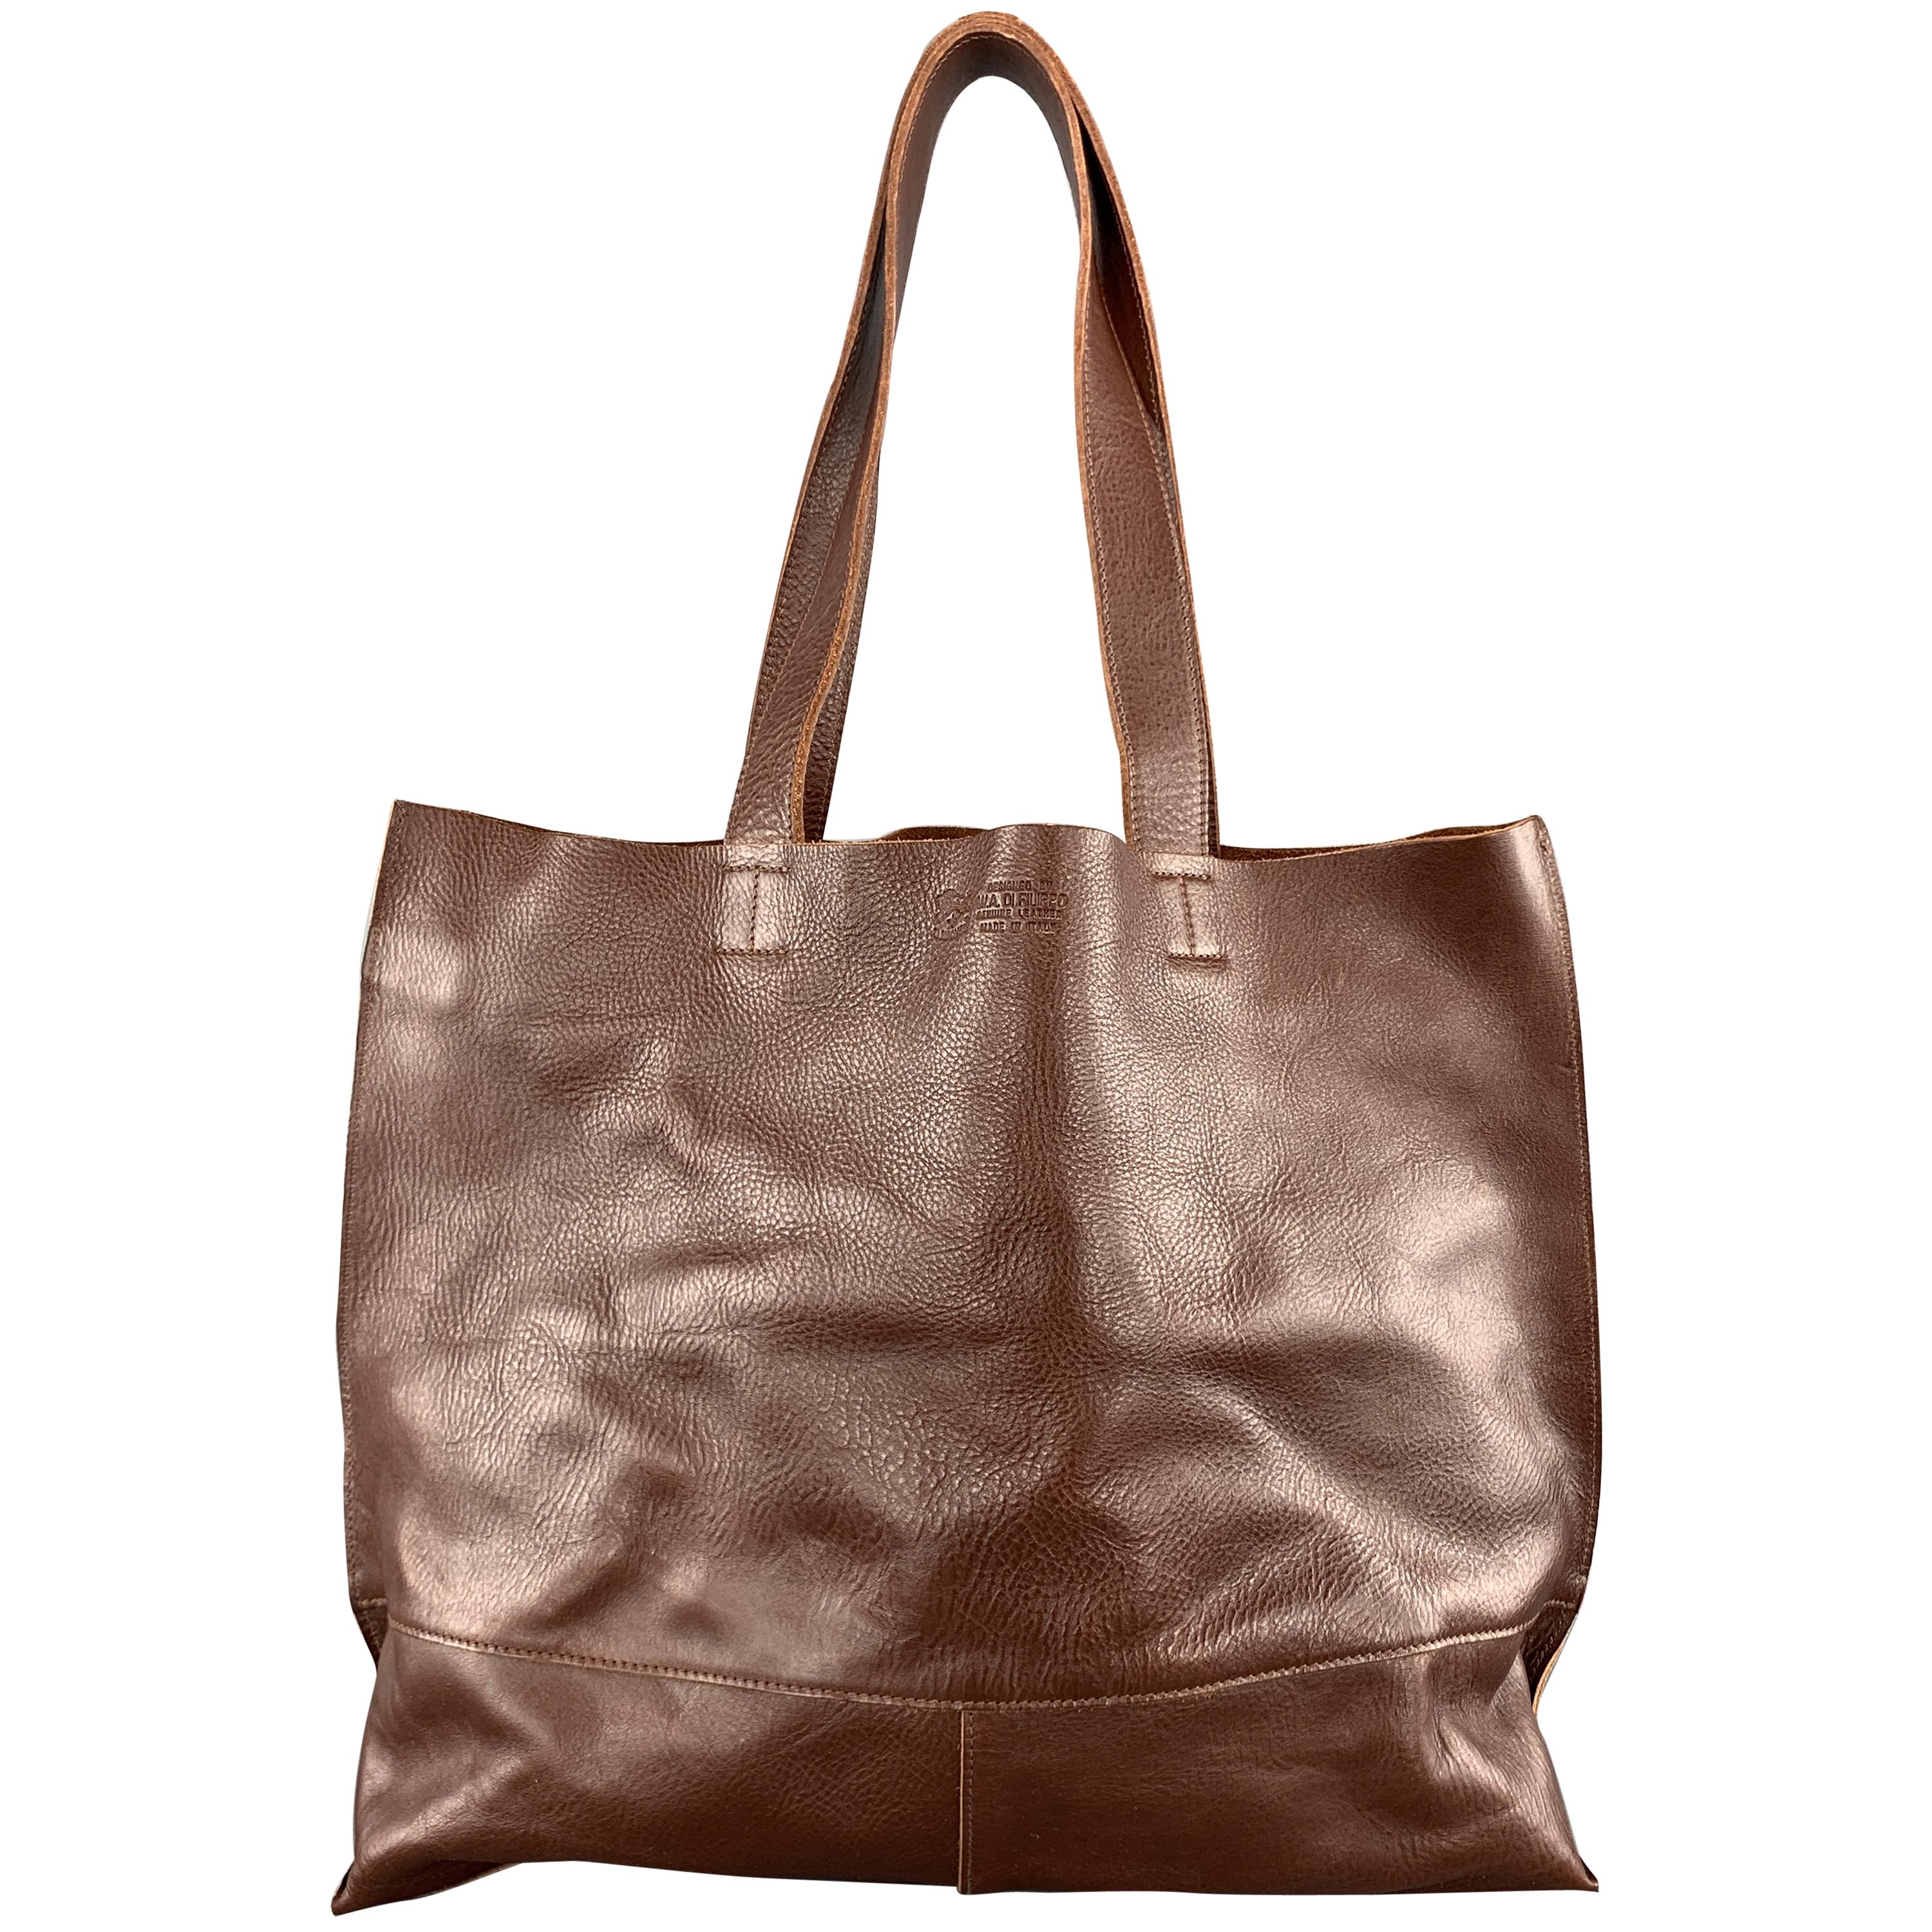 IL BISONTE Brown Leather TALAMONE Tote Handbag